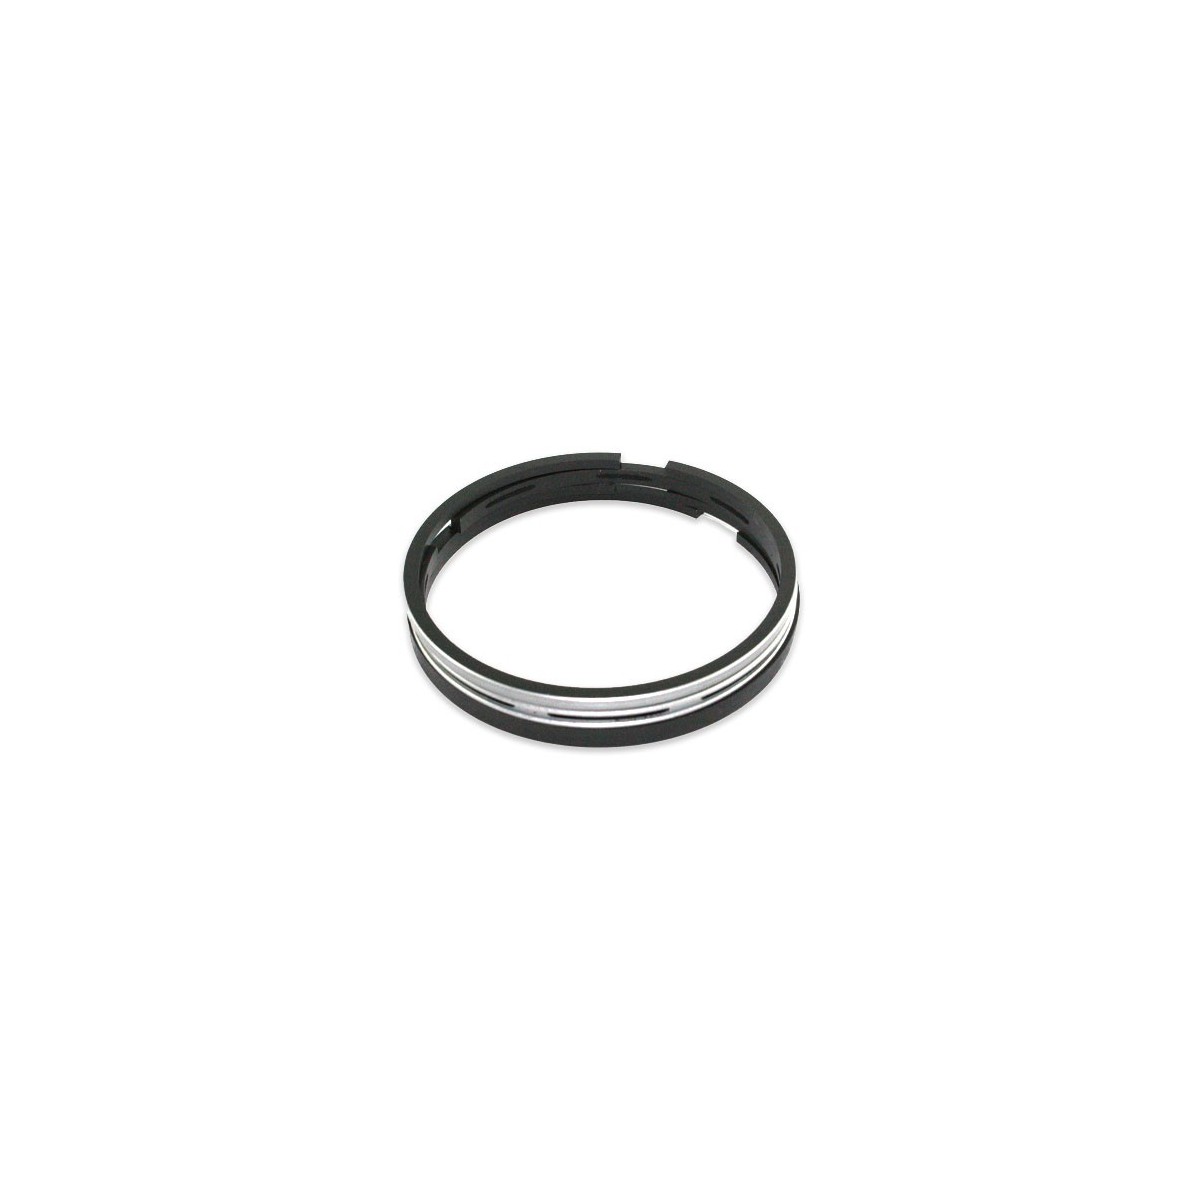 Piston rings for Shibaura SD2200-2640 85: 2.9 x 2.5 x 2.5 x 4 STD